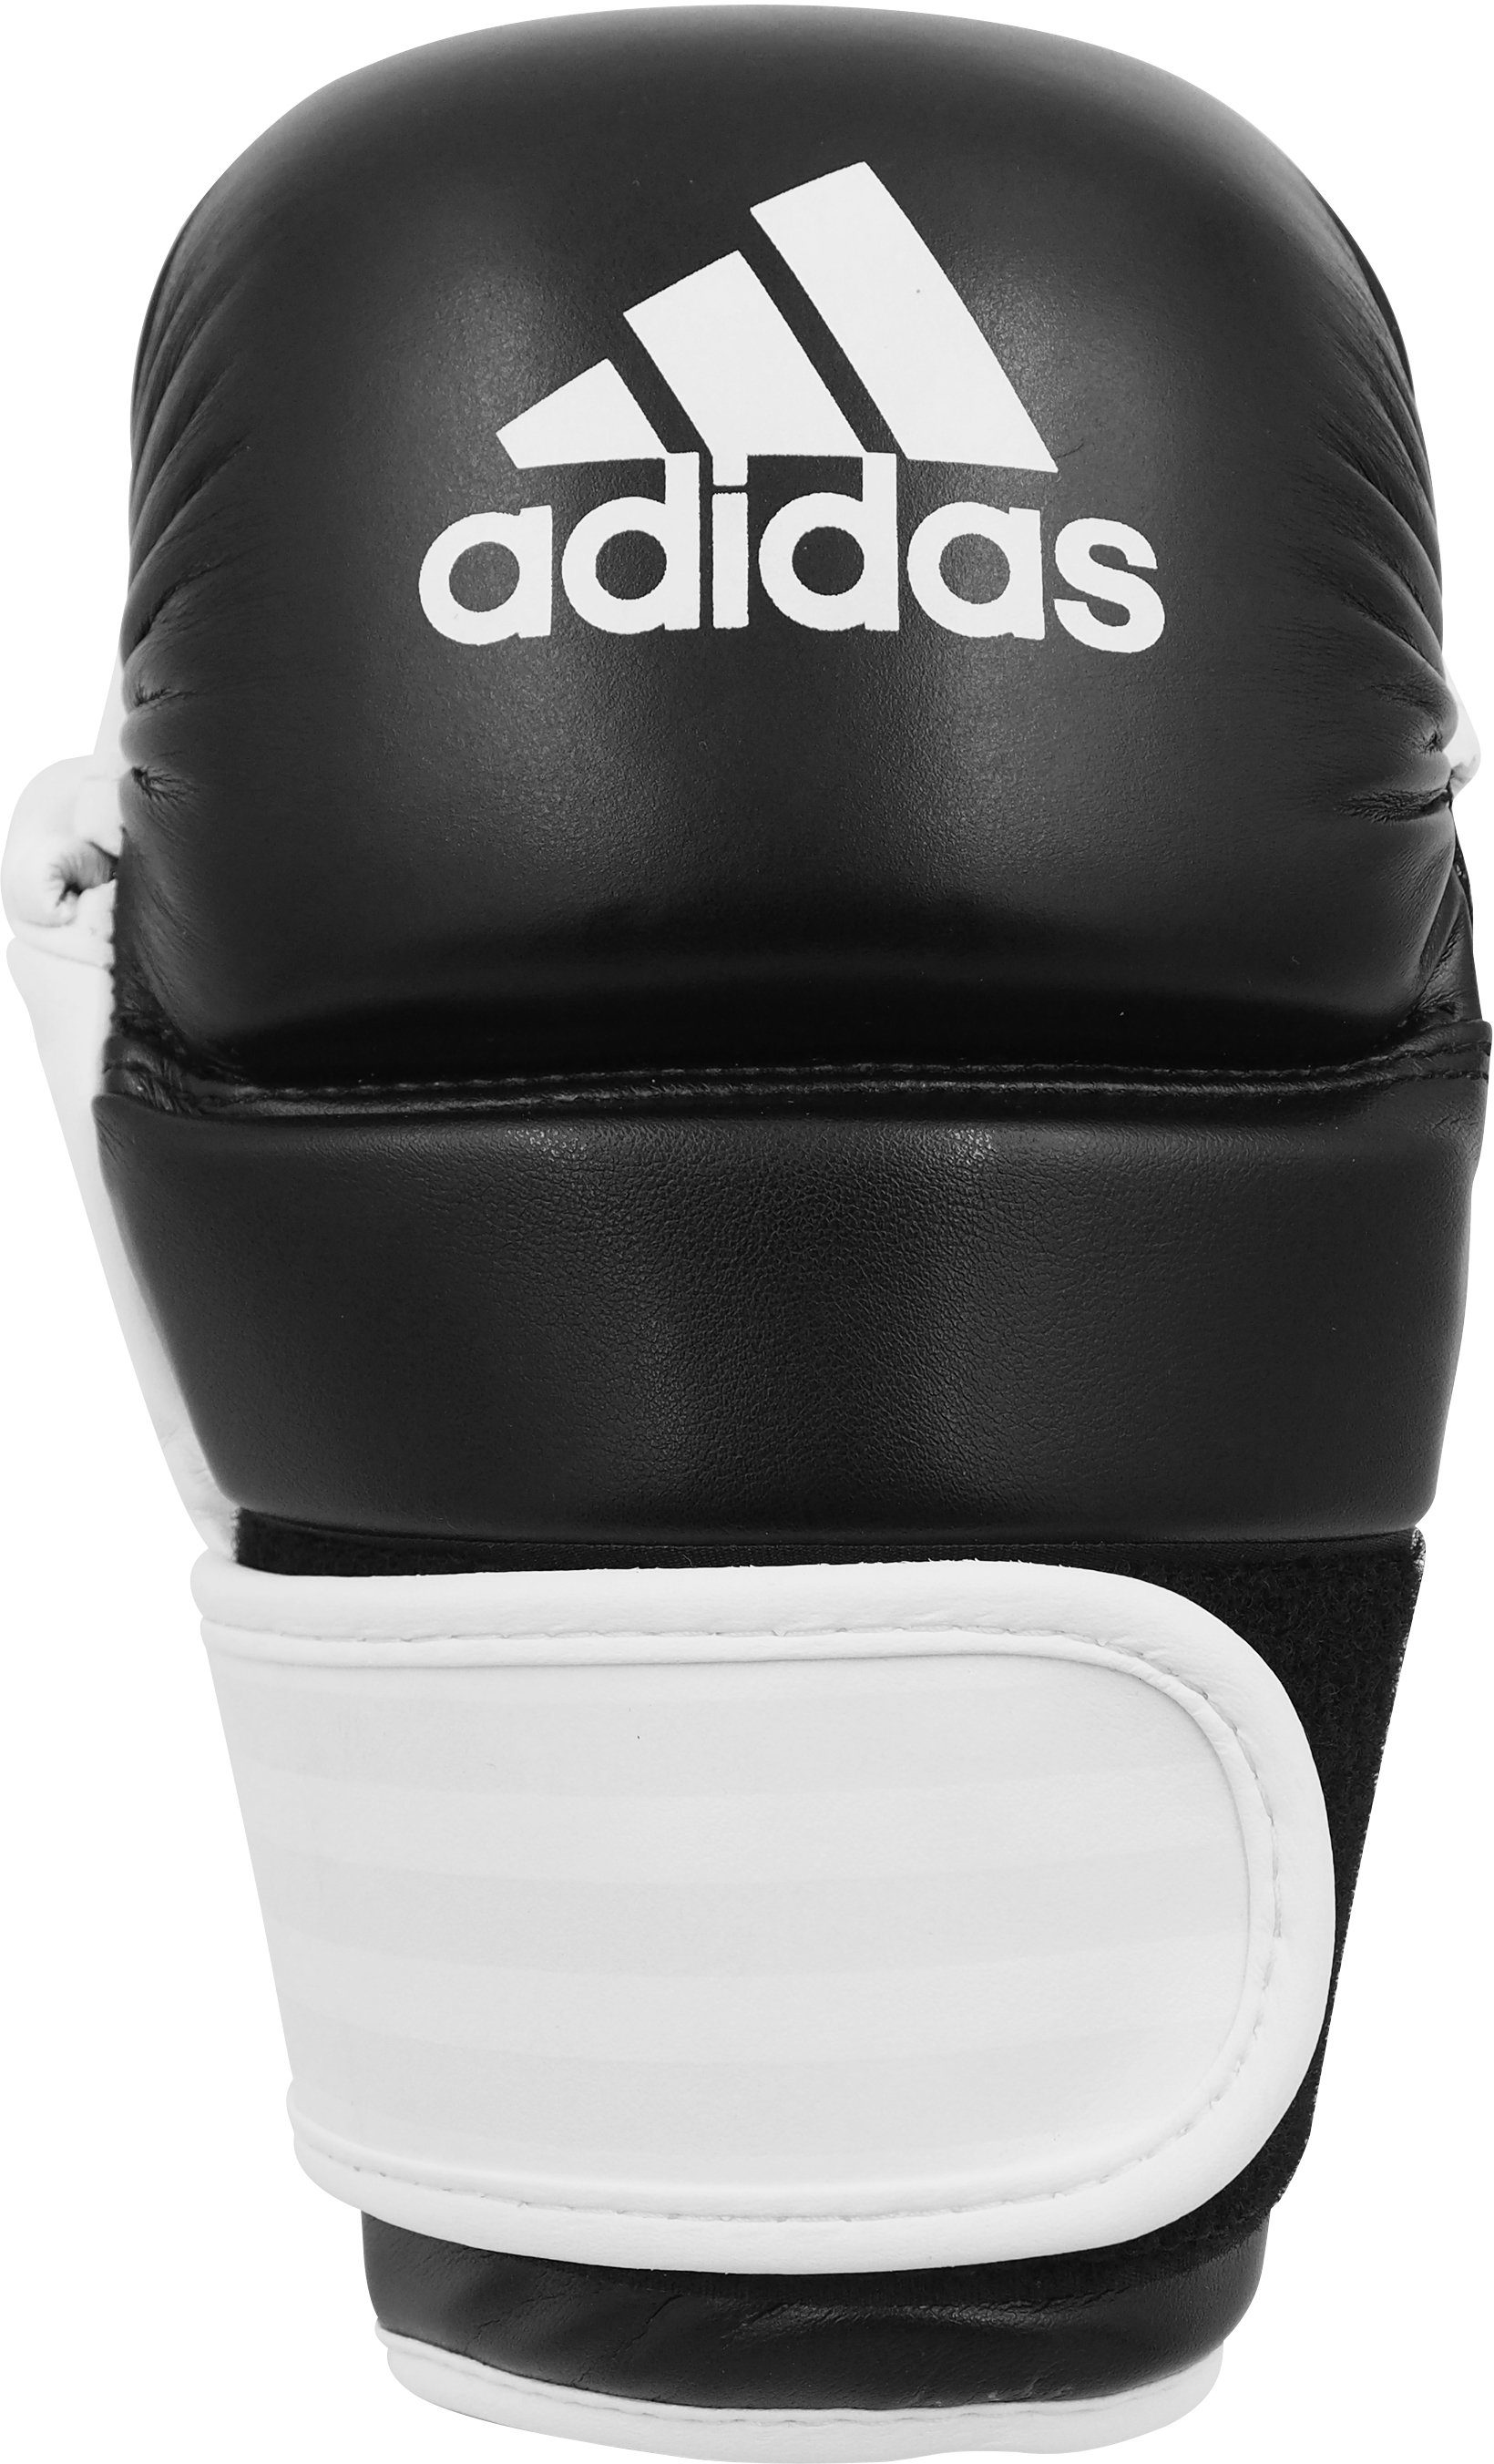 MMA-Handschuhe adidas Training Performance Cloves Grappling